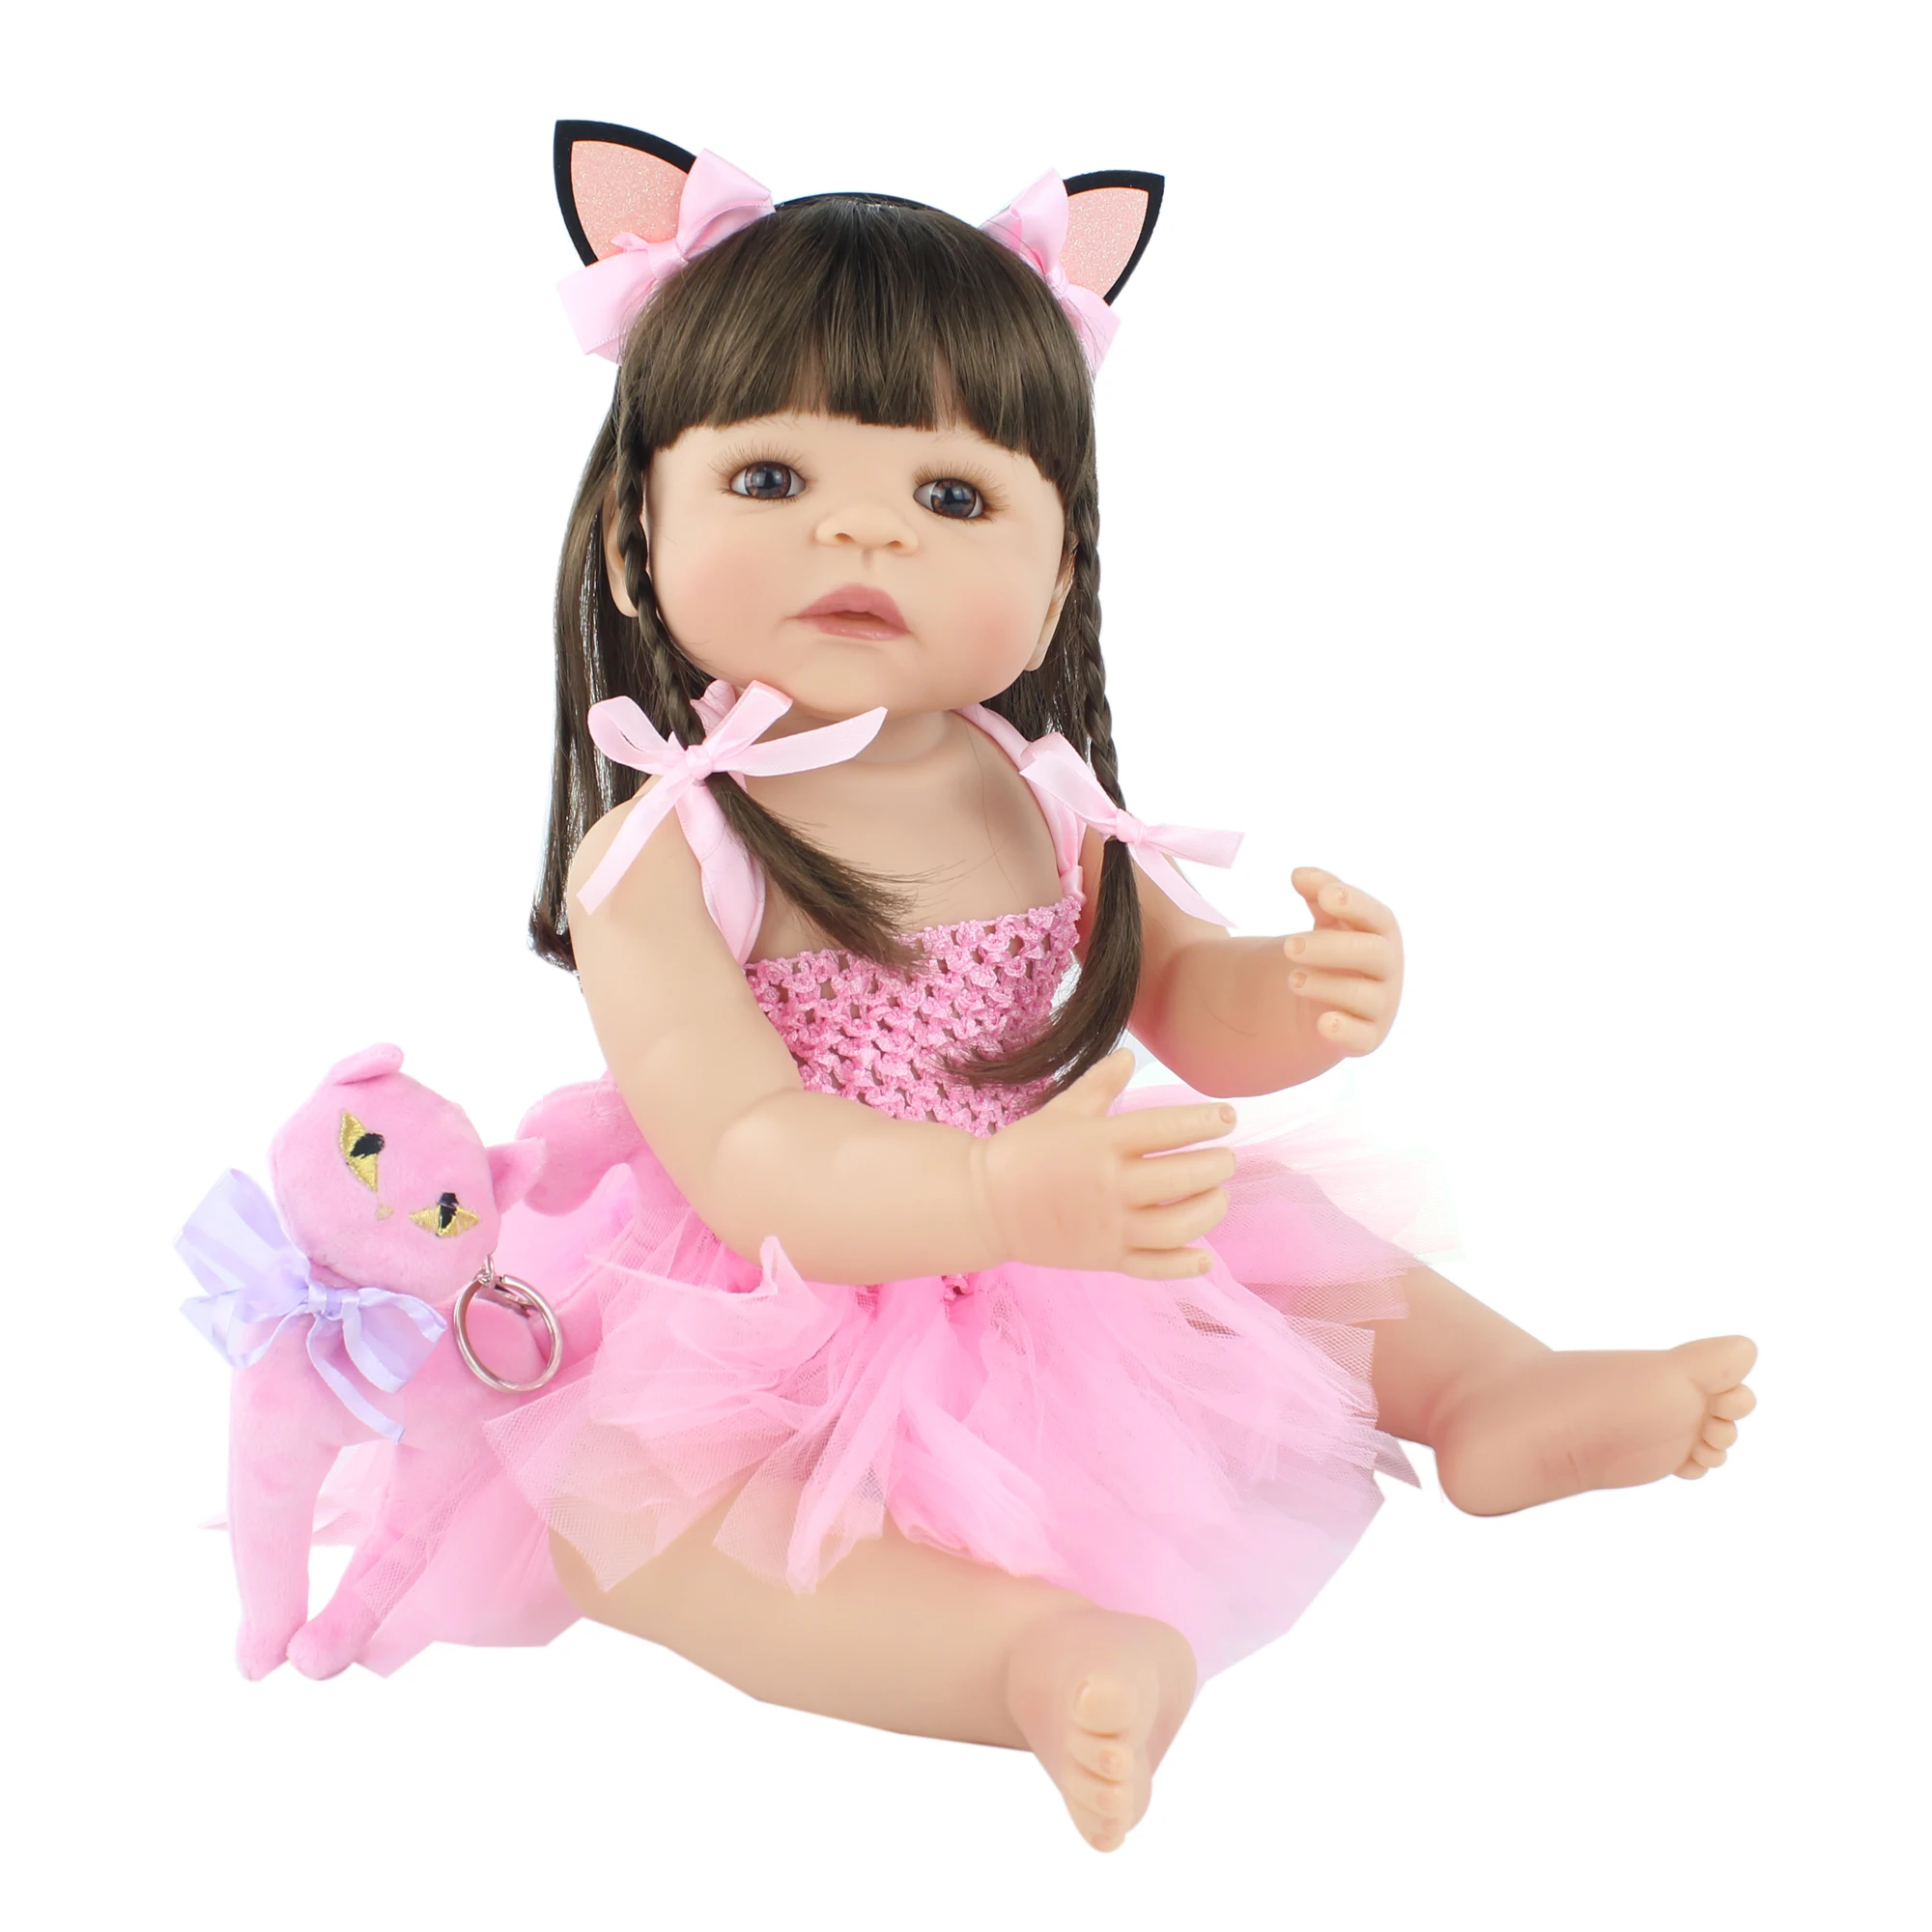 

BZDOLL Lifelike 55cm Full Silicone Reborn Girl Doll Newborn Toddler 22inch Alive Princess Babies Bebe Boneca Bathe Toy